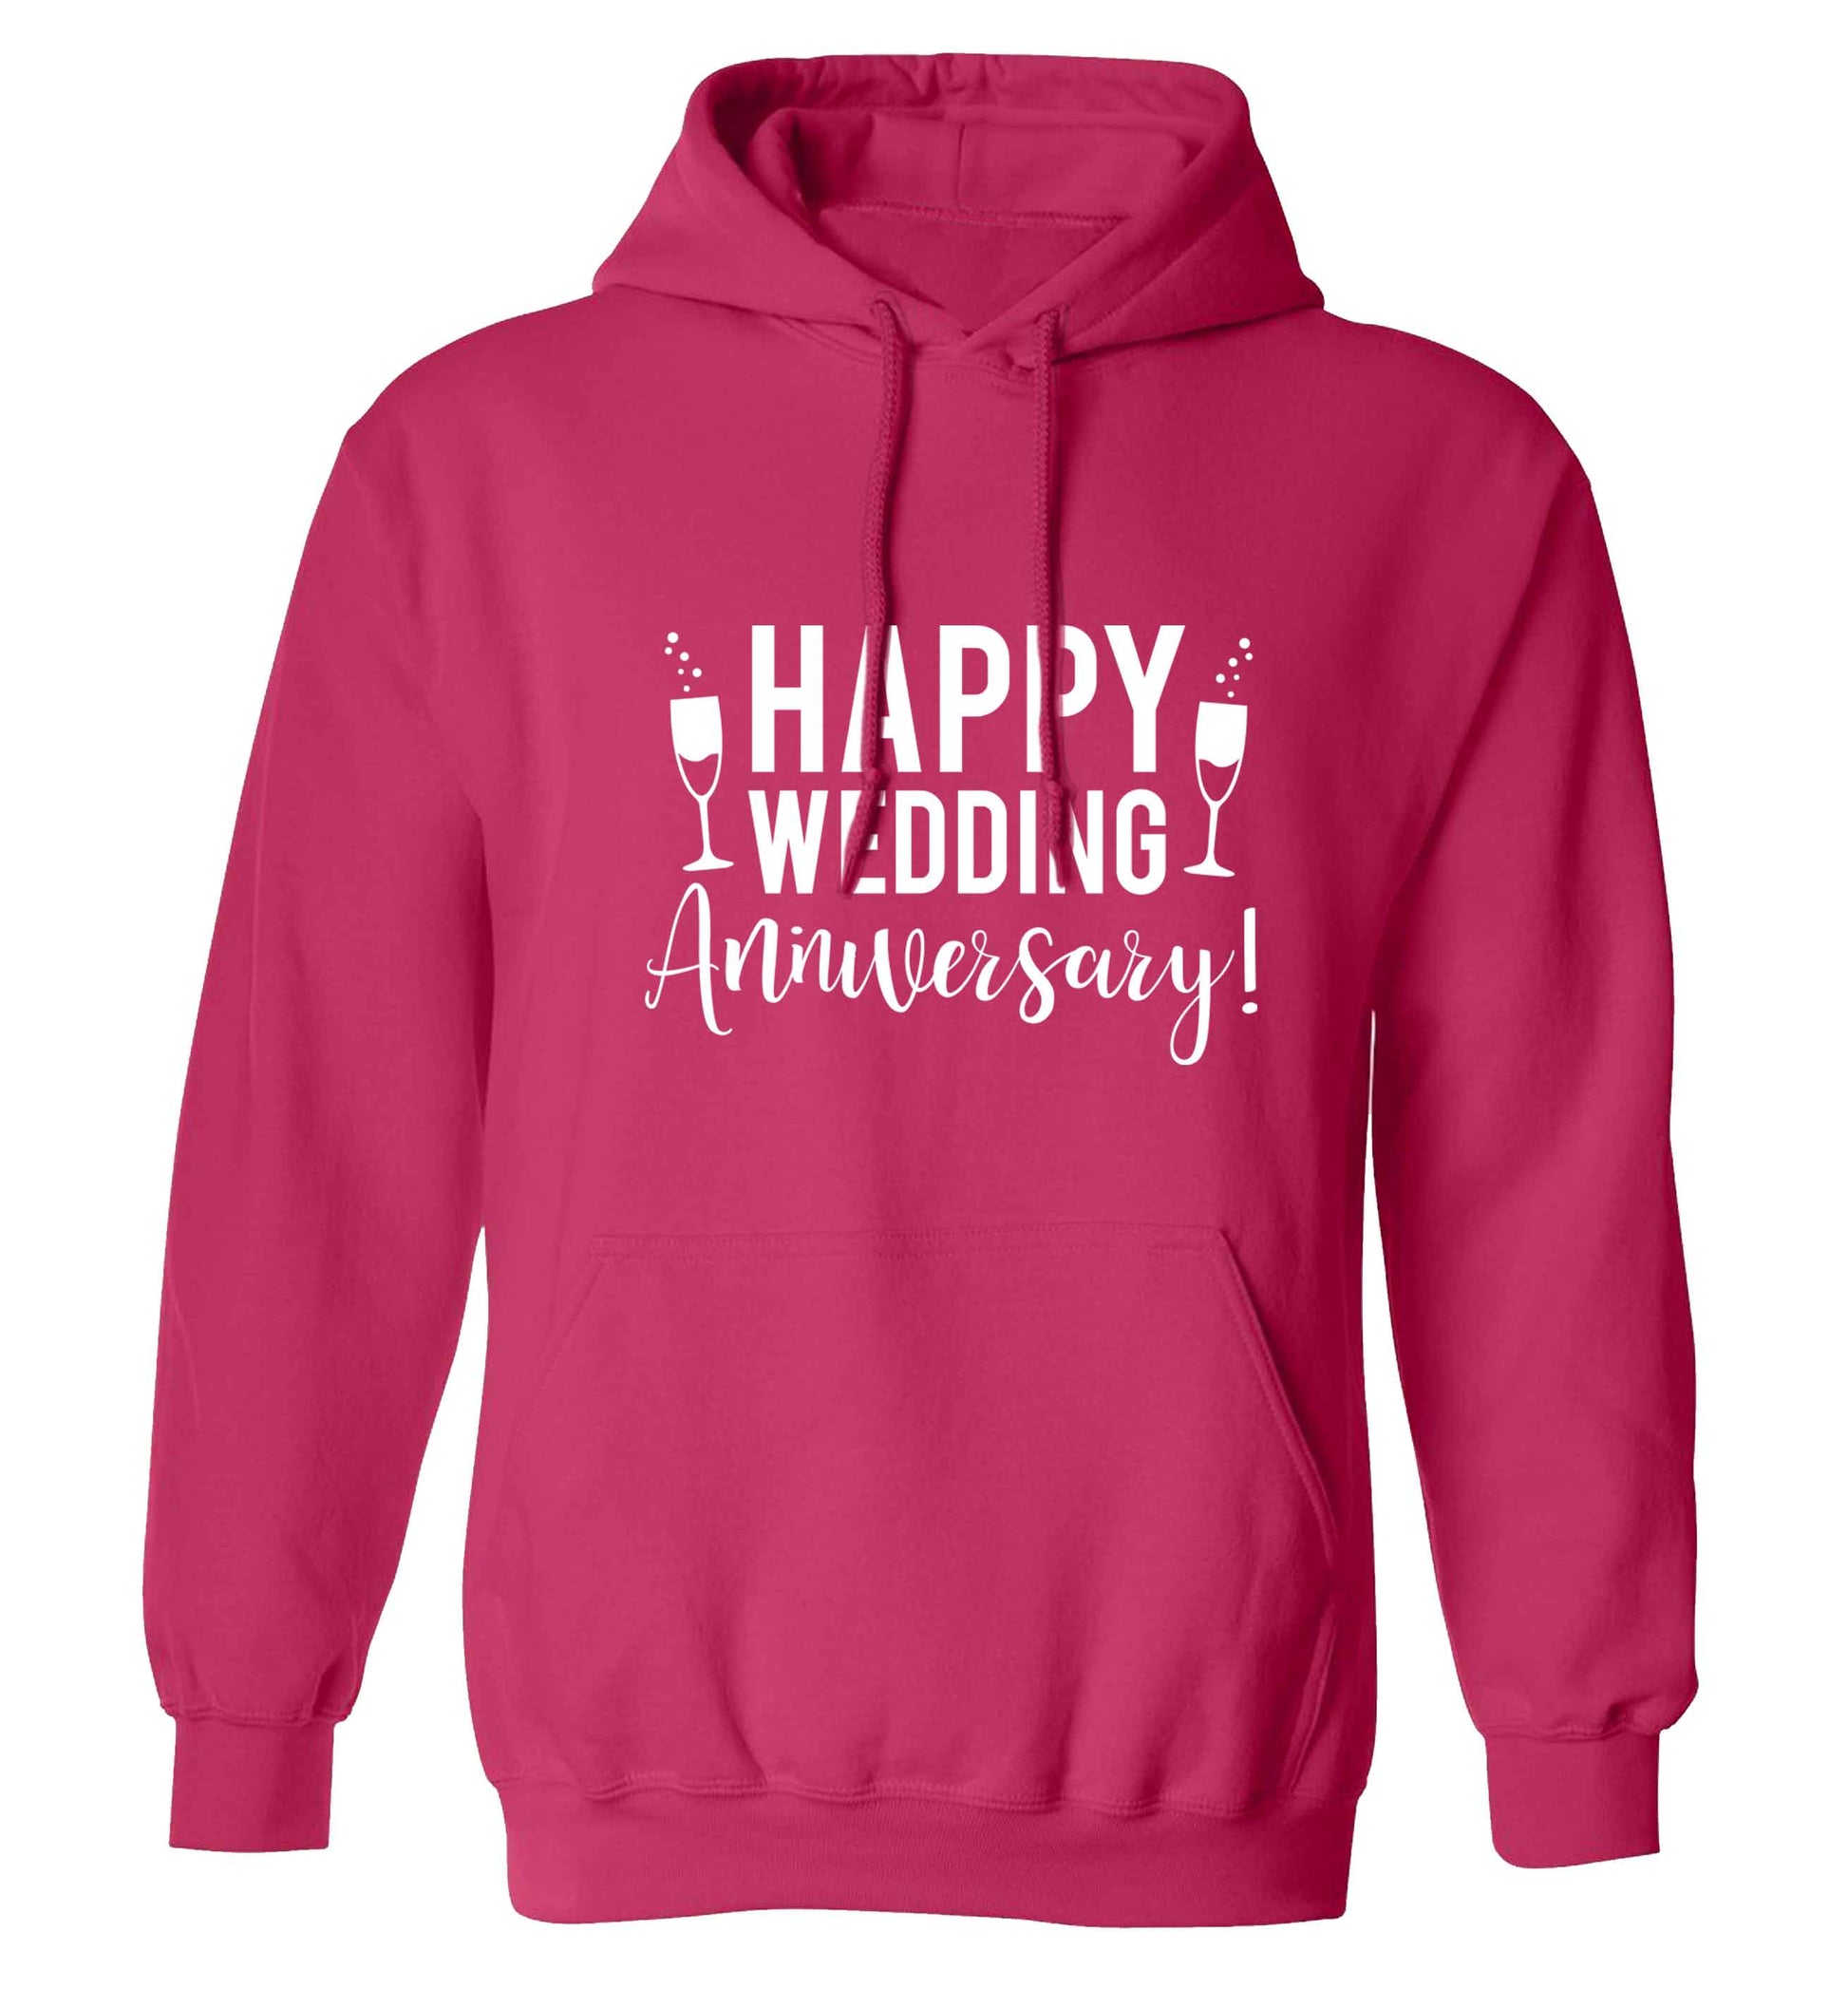 Happy wedding anniversary! adults unisex pink hoodie 2XL